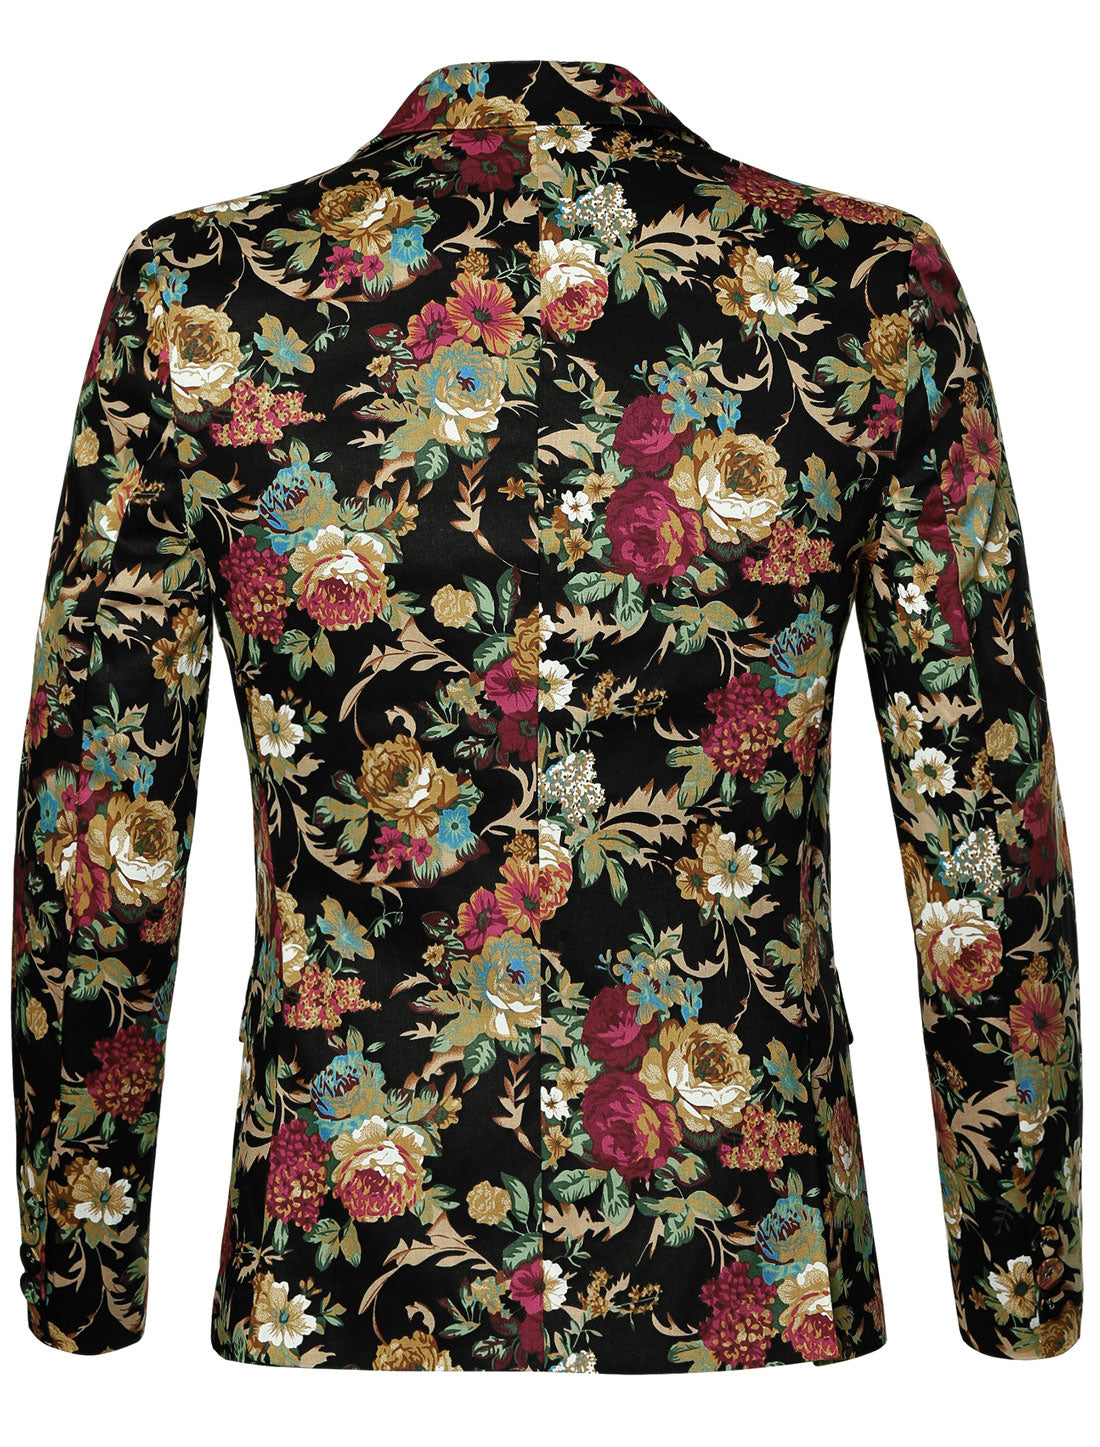 Bublédon Lightweight Floral Print One Button Prom Suit Blazer